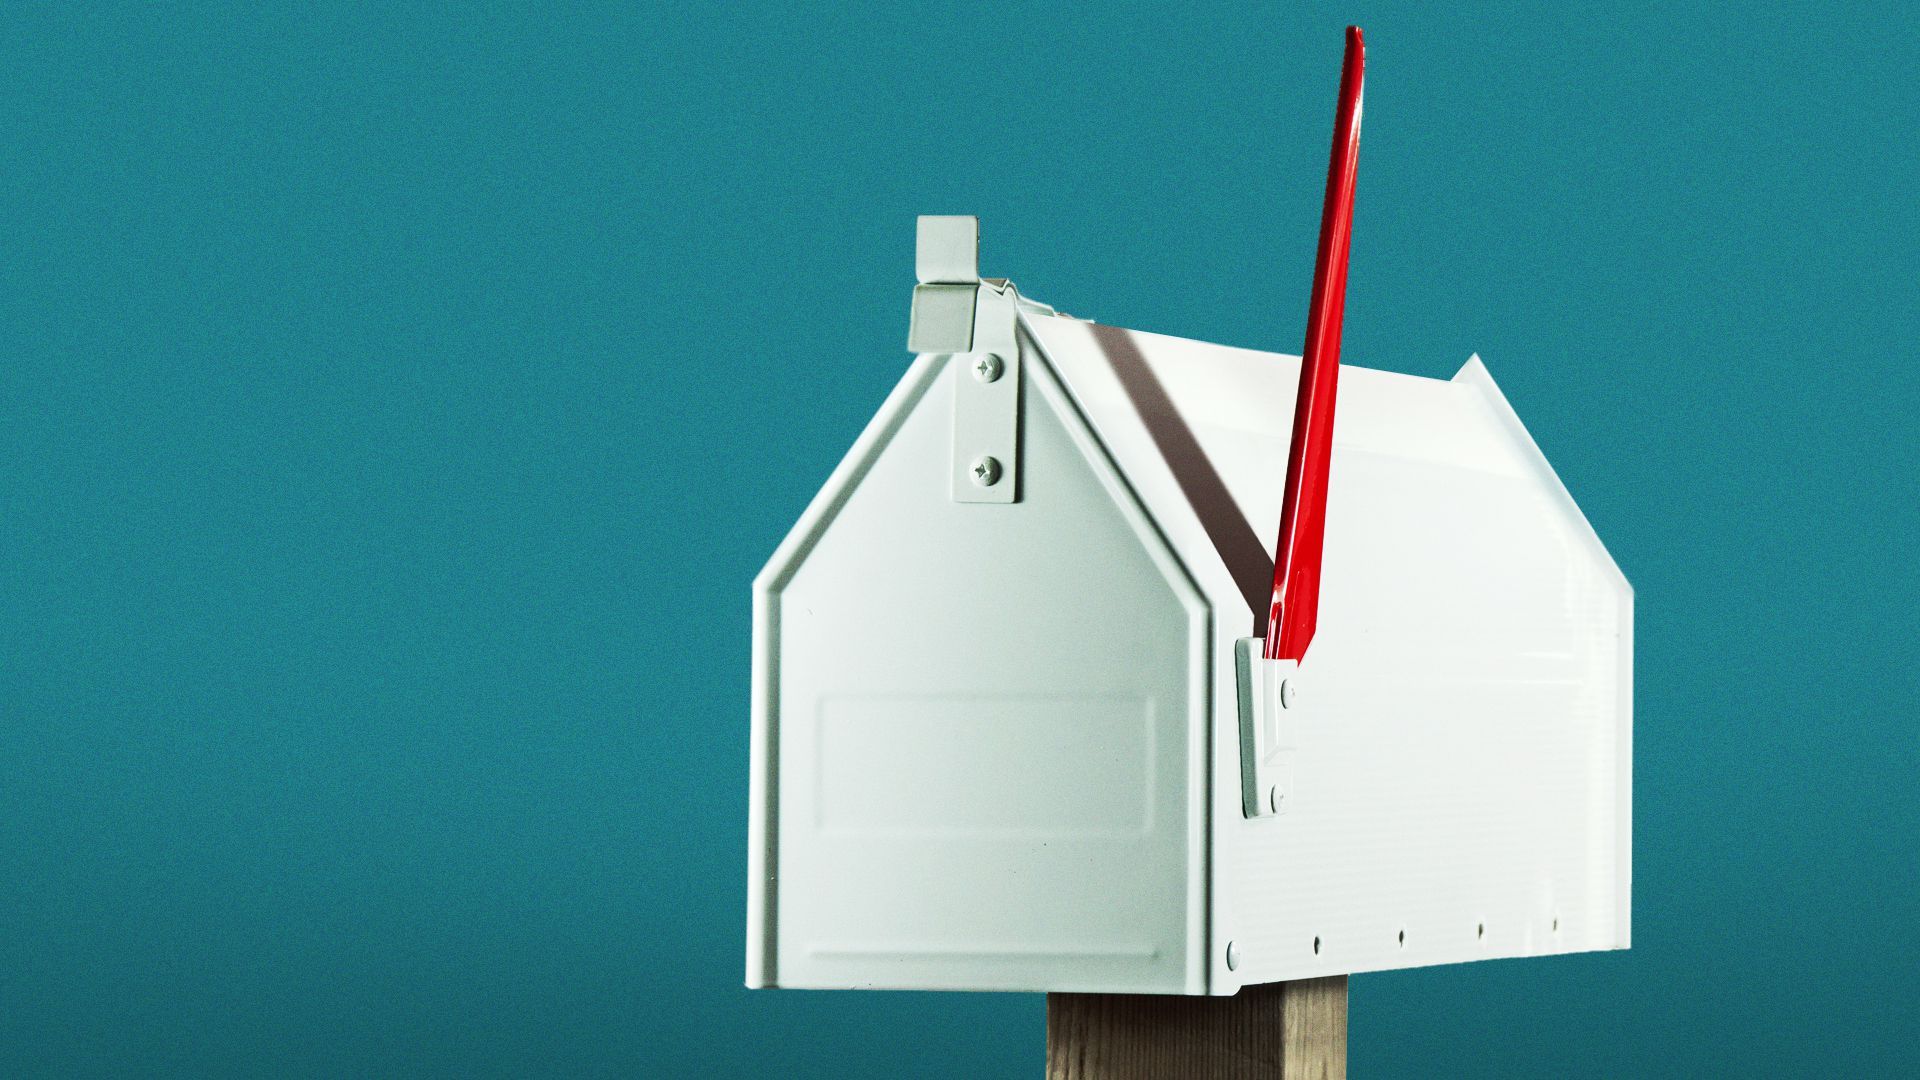 Illustration of a mailbox shaped like a house.